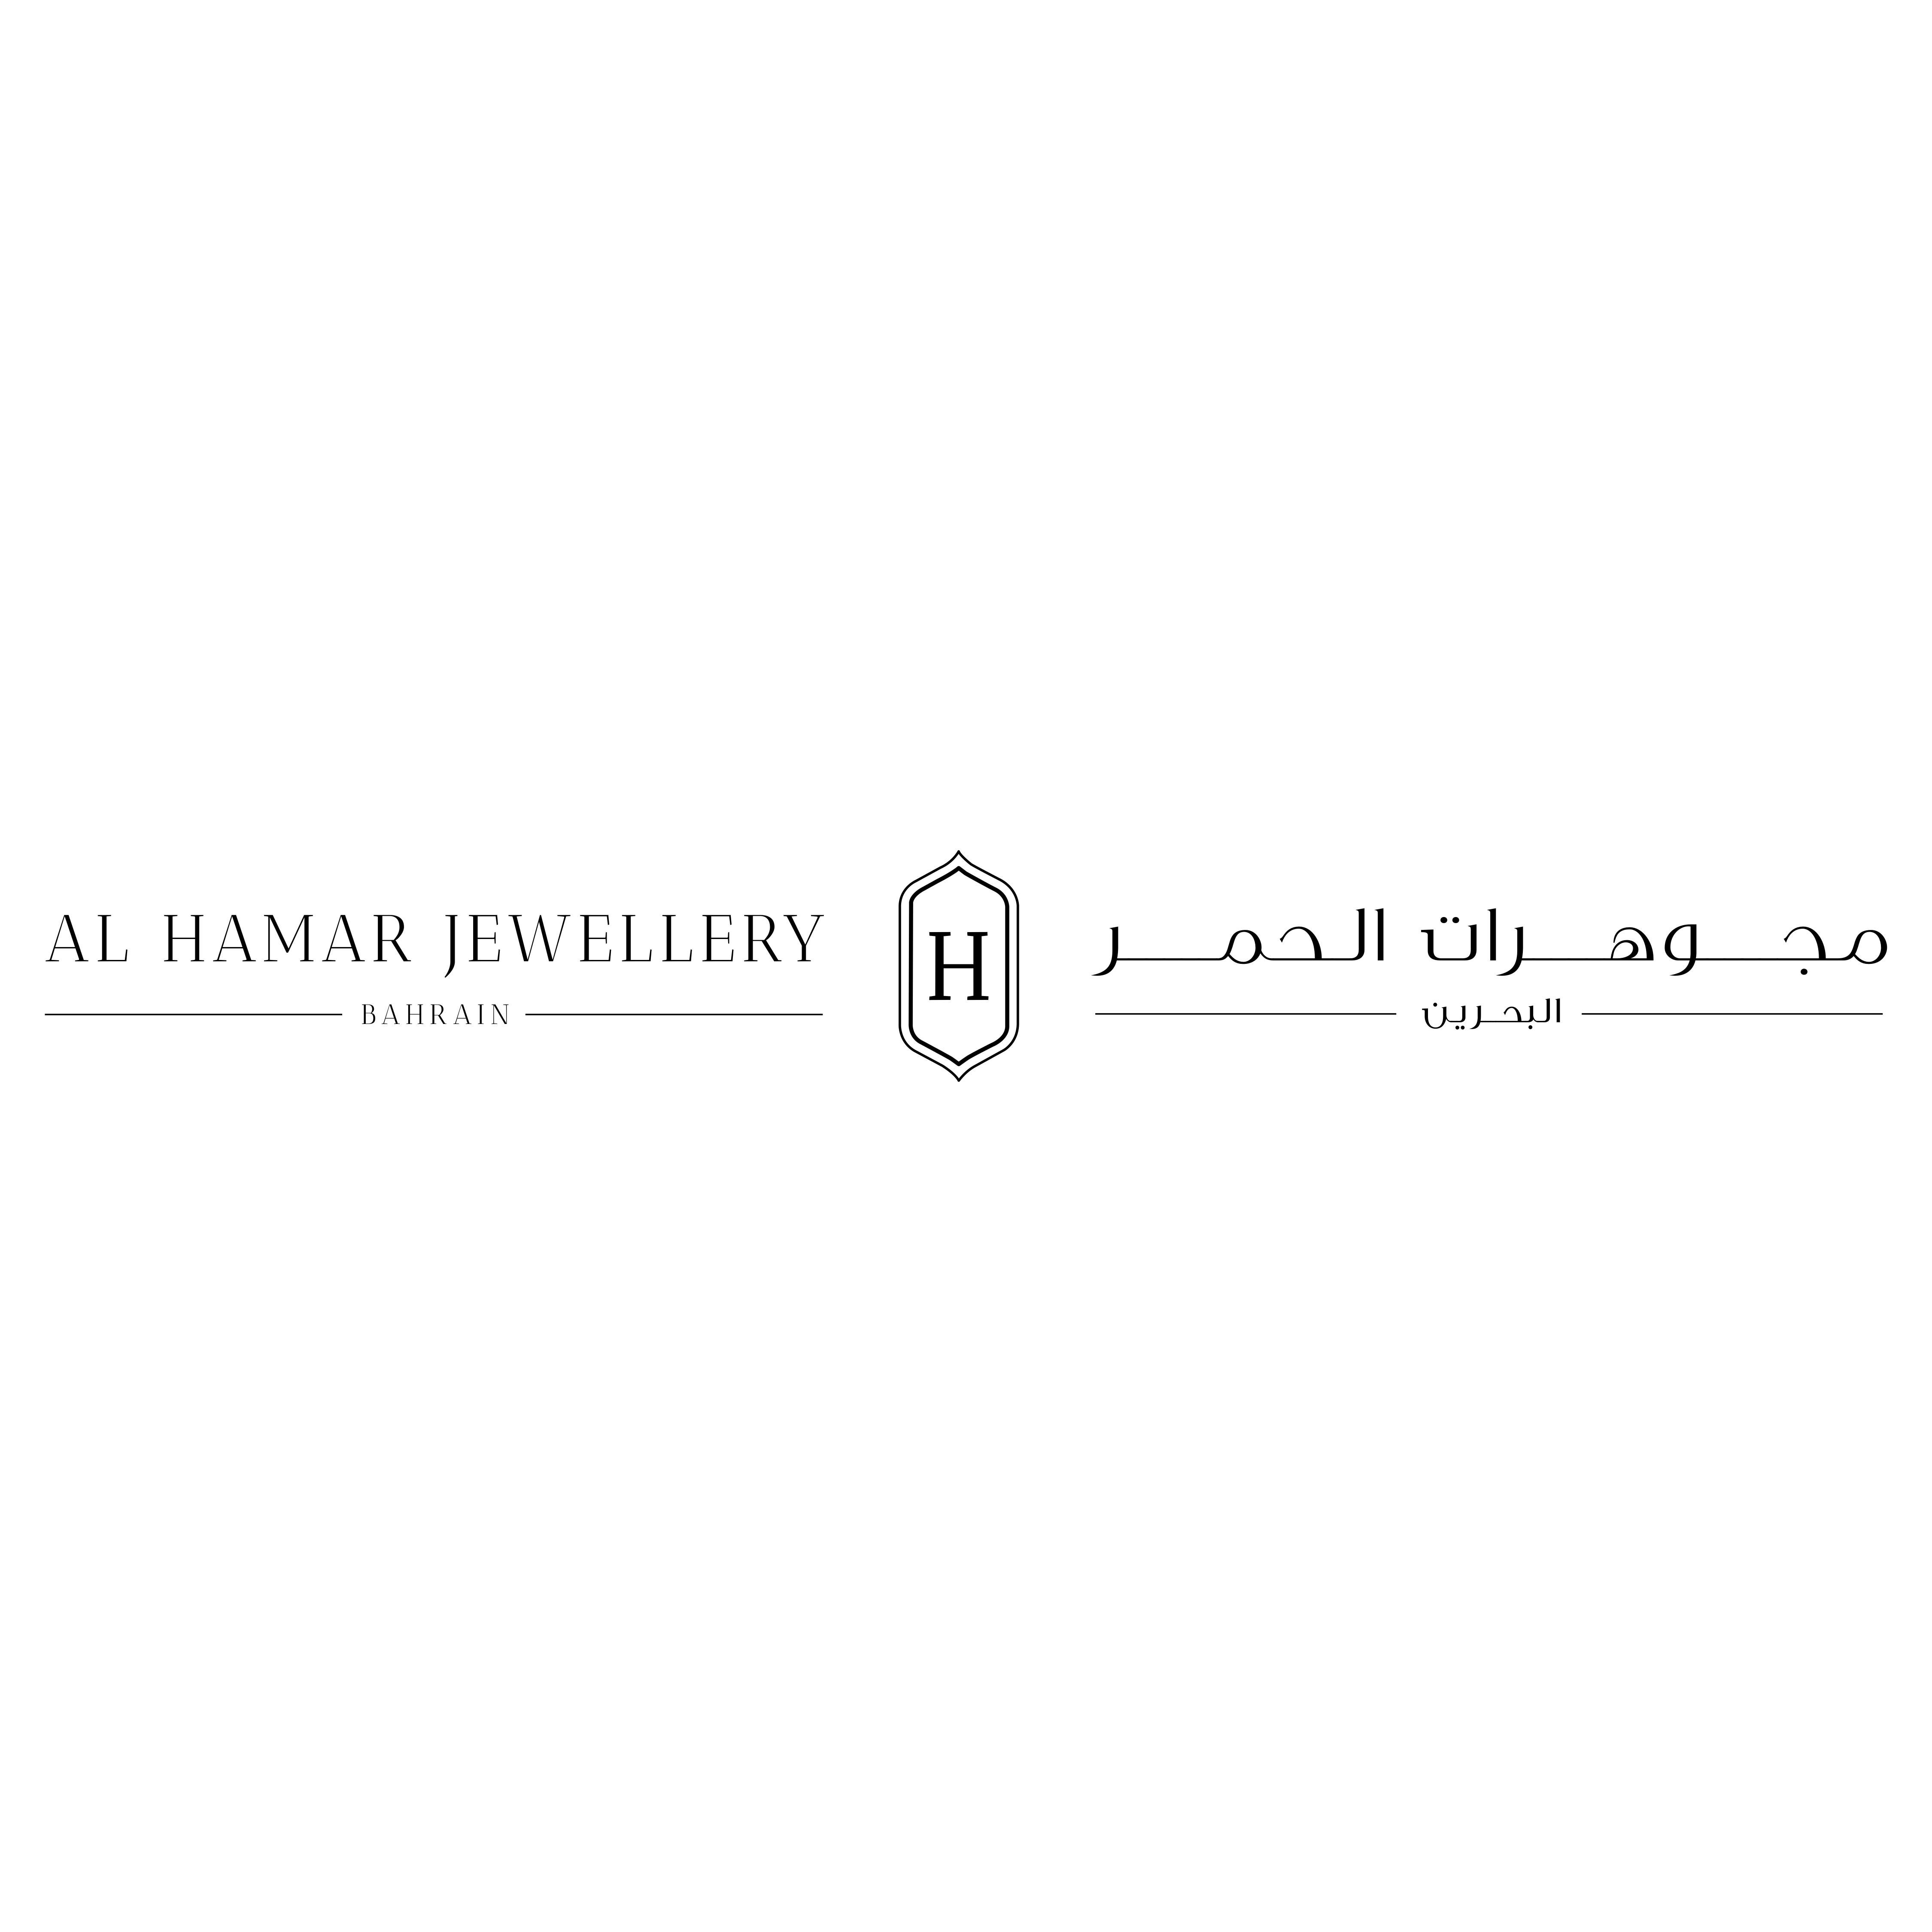 Al Hamar Jewellery